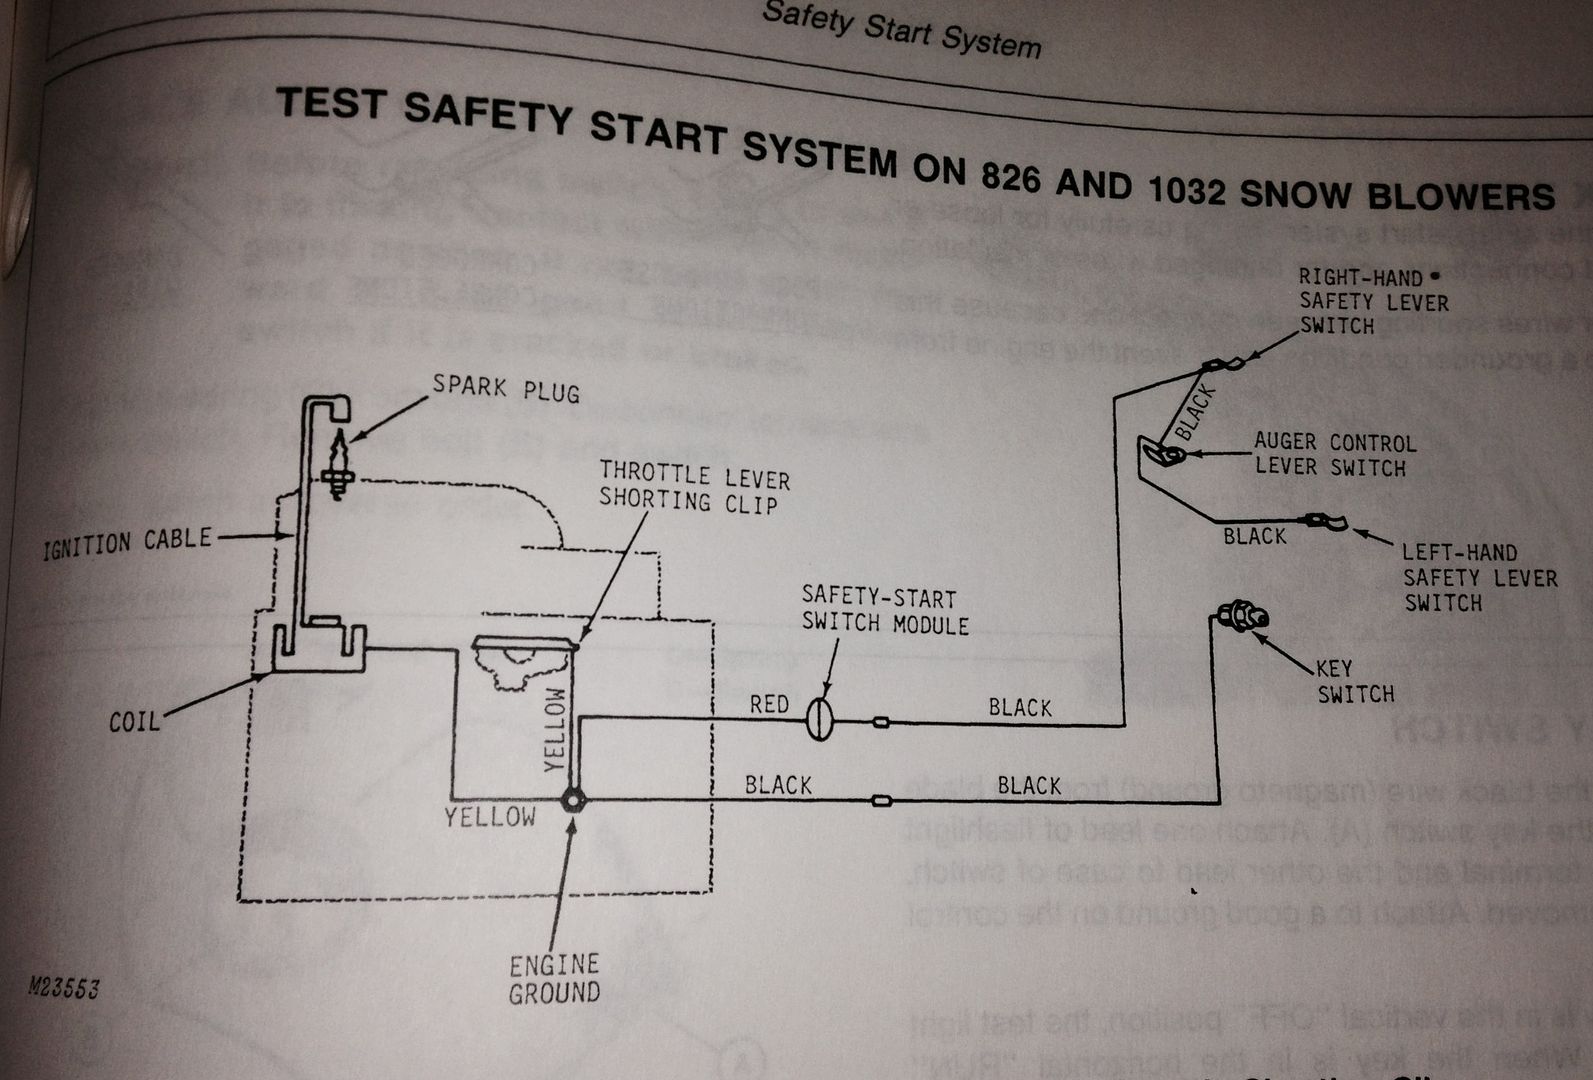 John Deere 826 Snowblower Parts Diagram Wiring Diagram